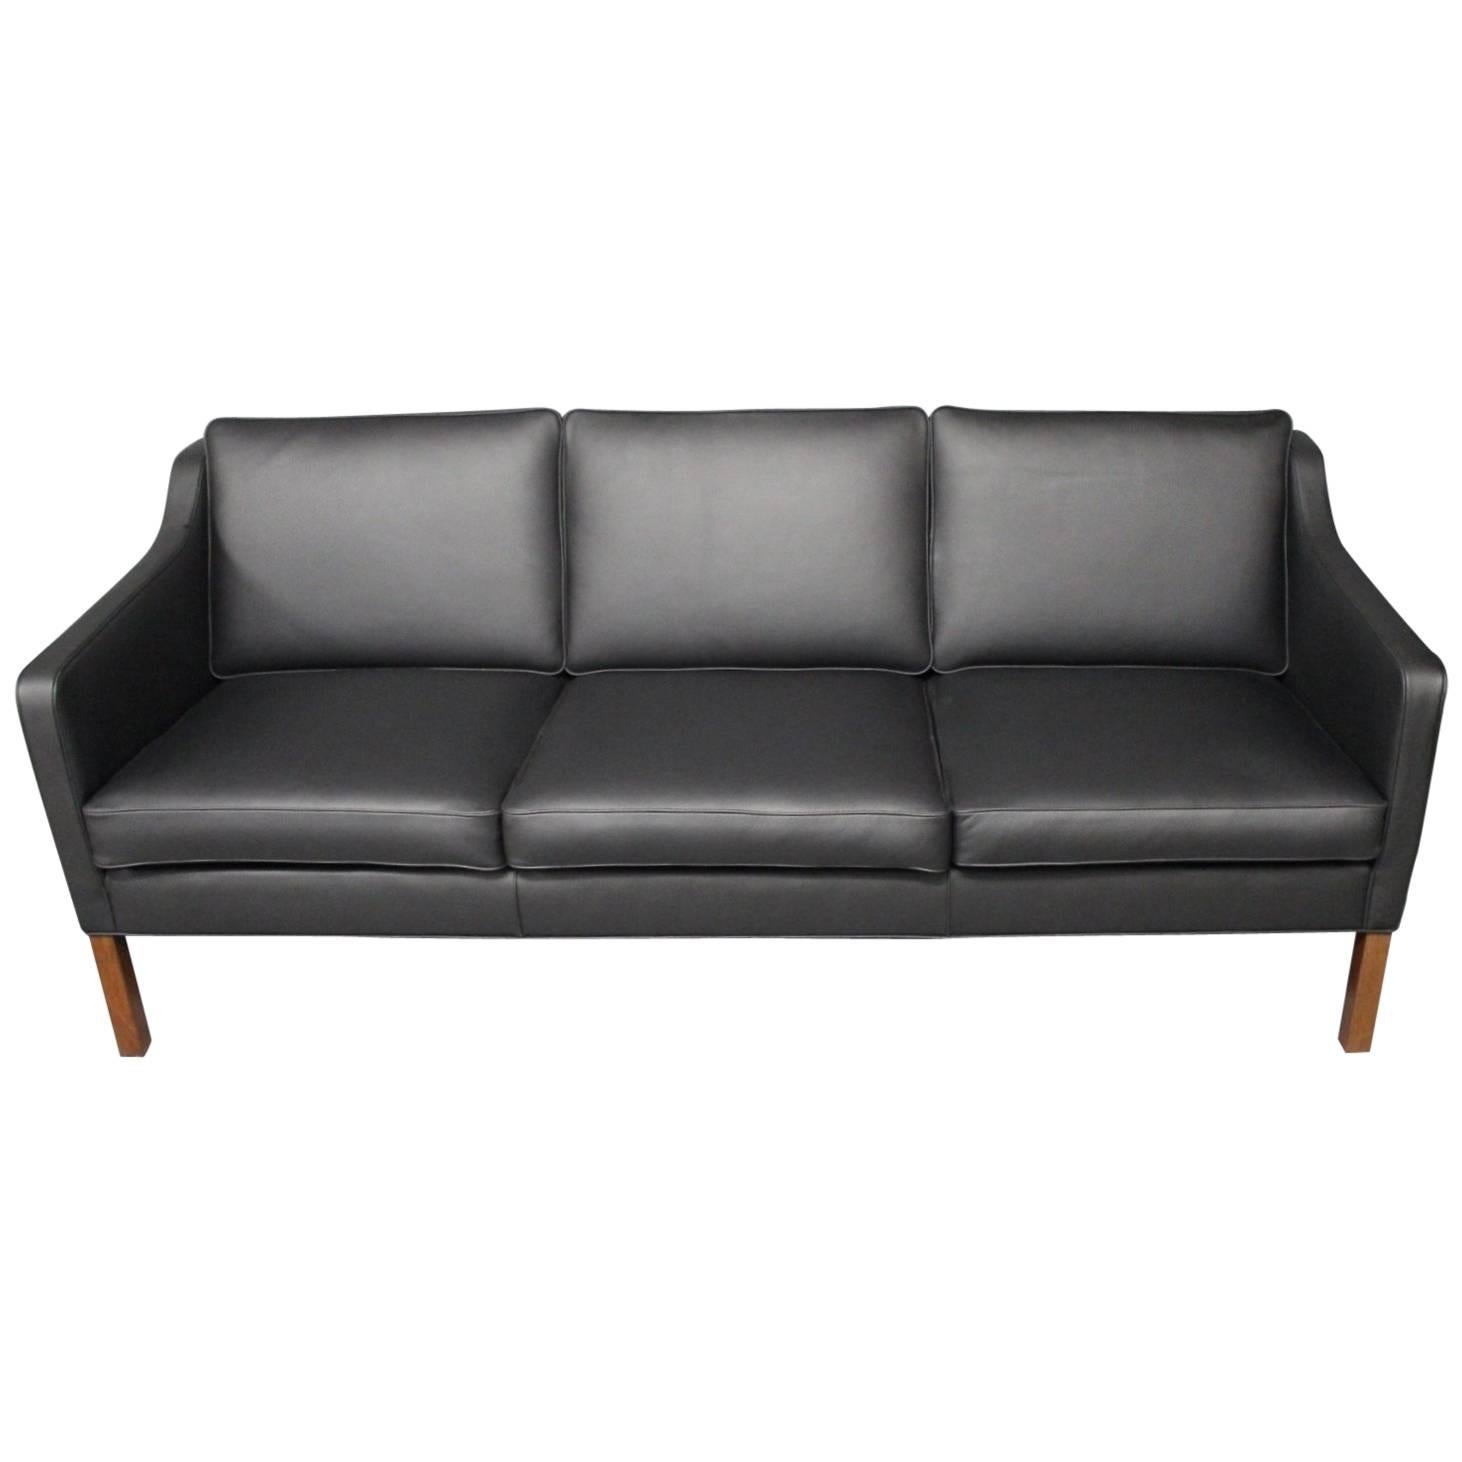 2209 BM Three-Seat Sofa in Black Leather by Børge Mogensen, 1963